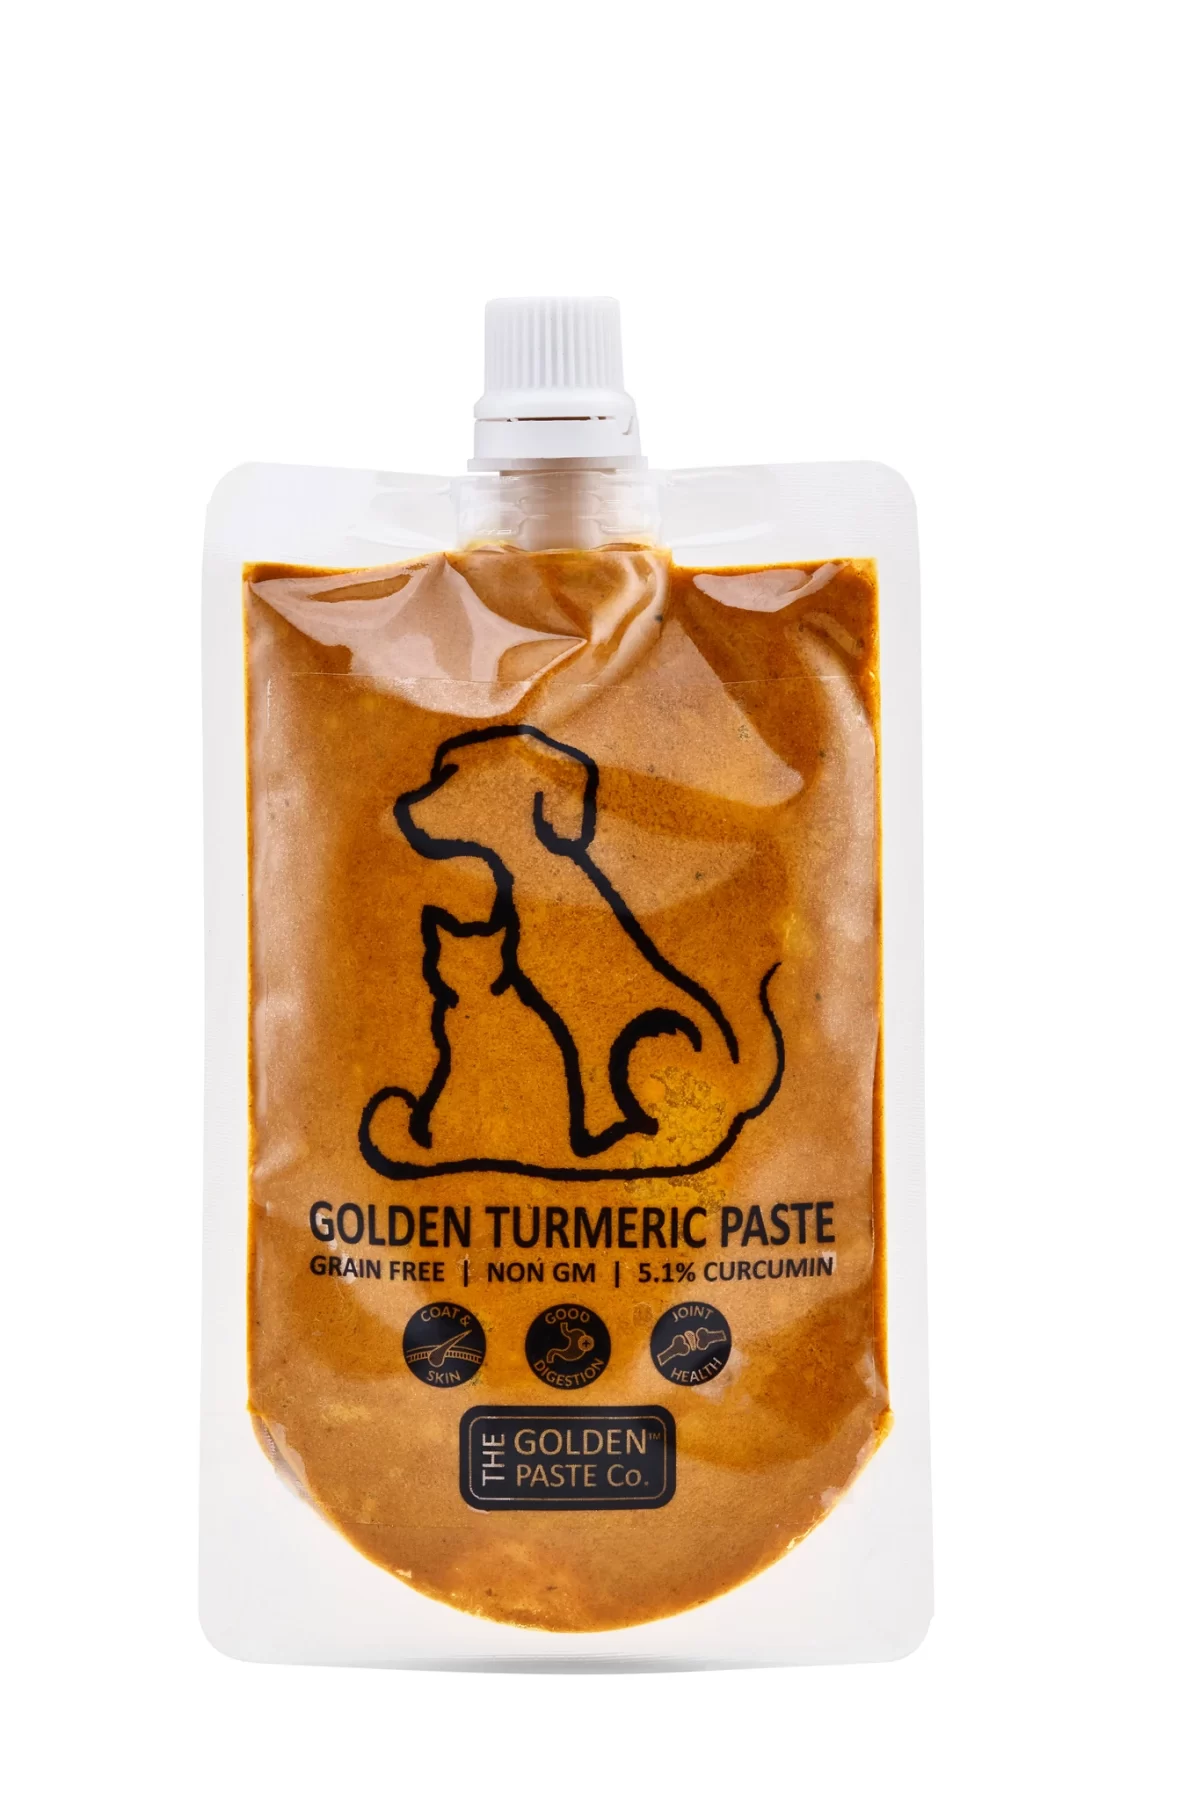 golden turmeric paste